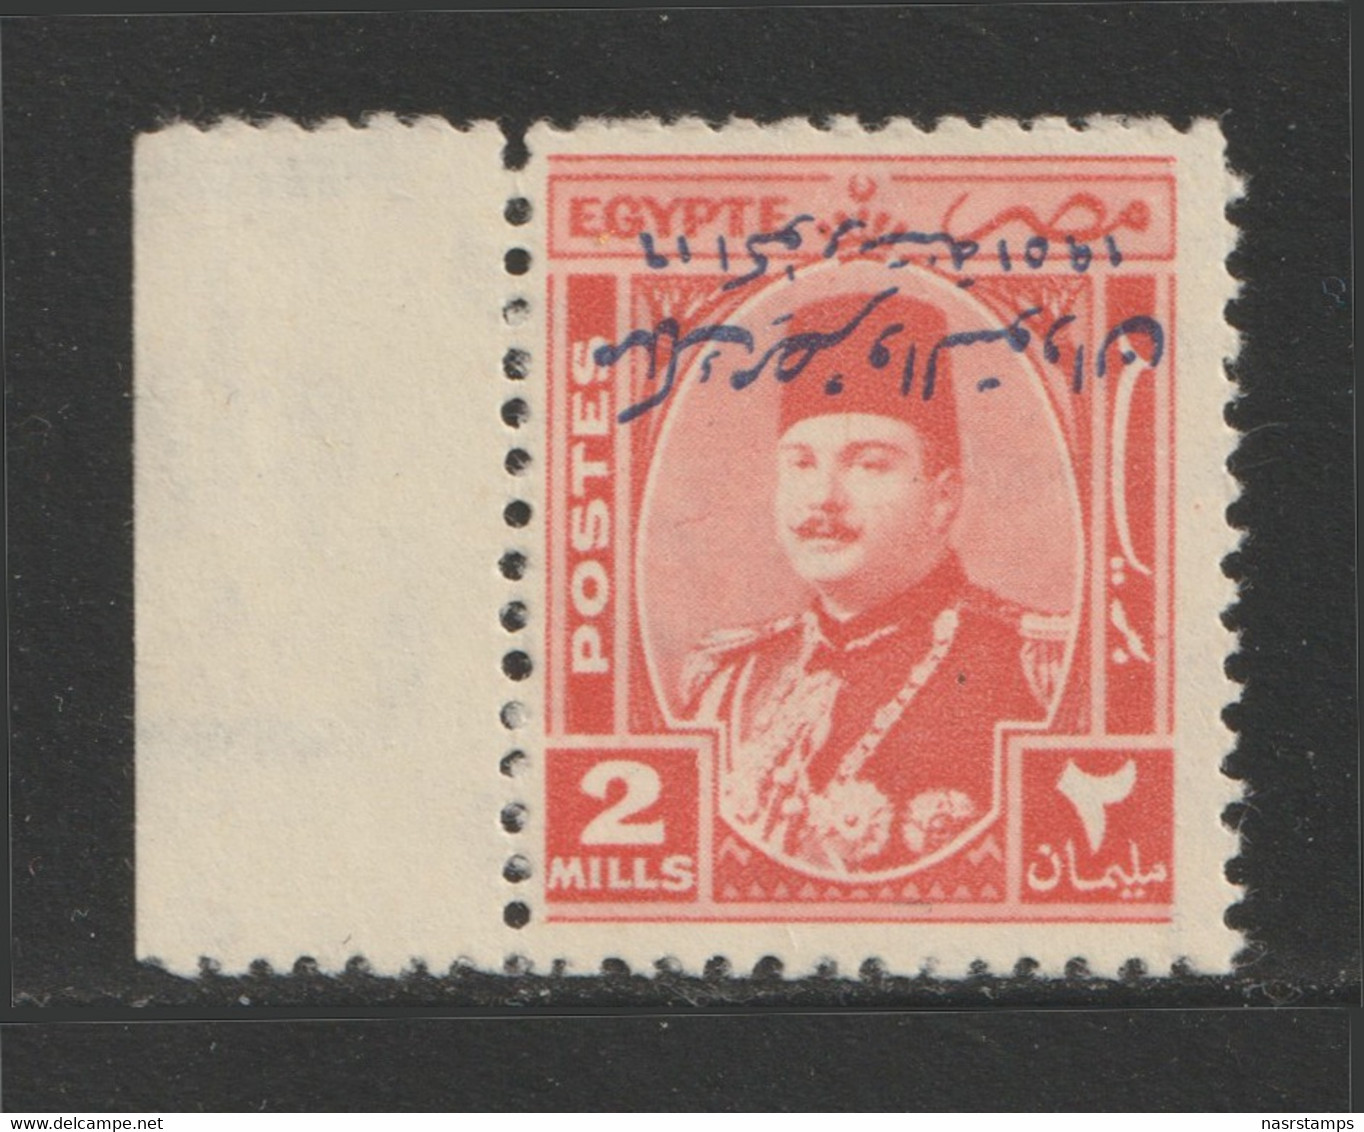 Egypt - 1945 - Rare - Inverted Overprint "Misr & Sudan" - ( King Farouk - 2m ) - MNH** - Unused Stamps